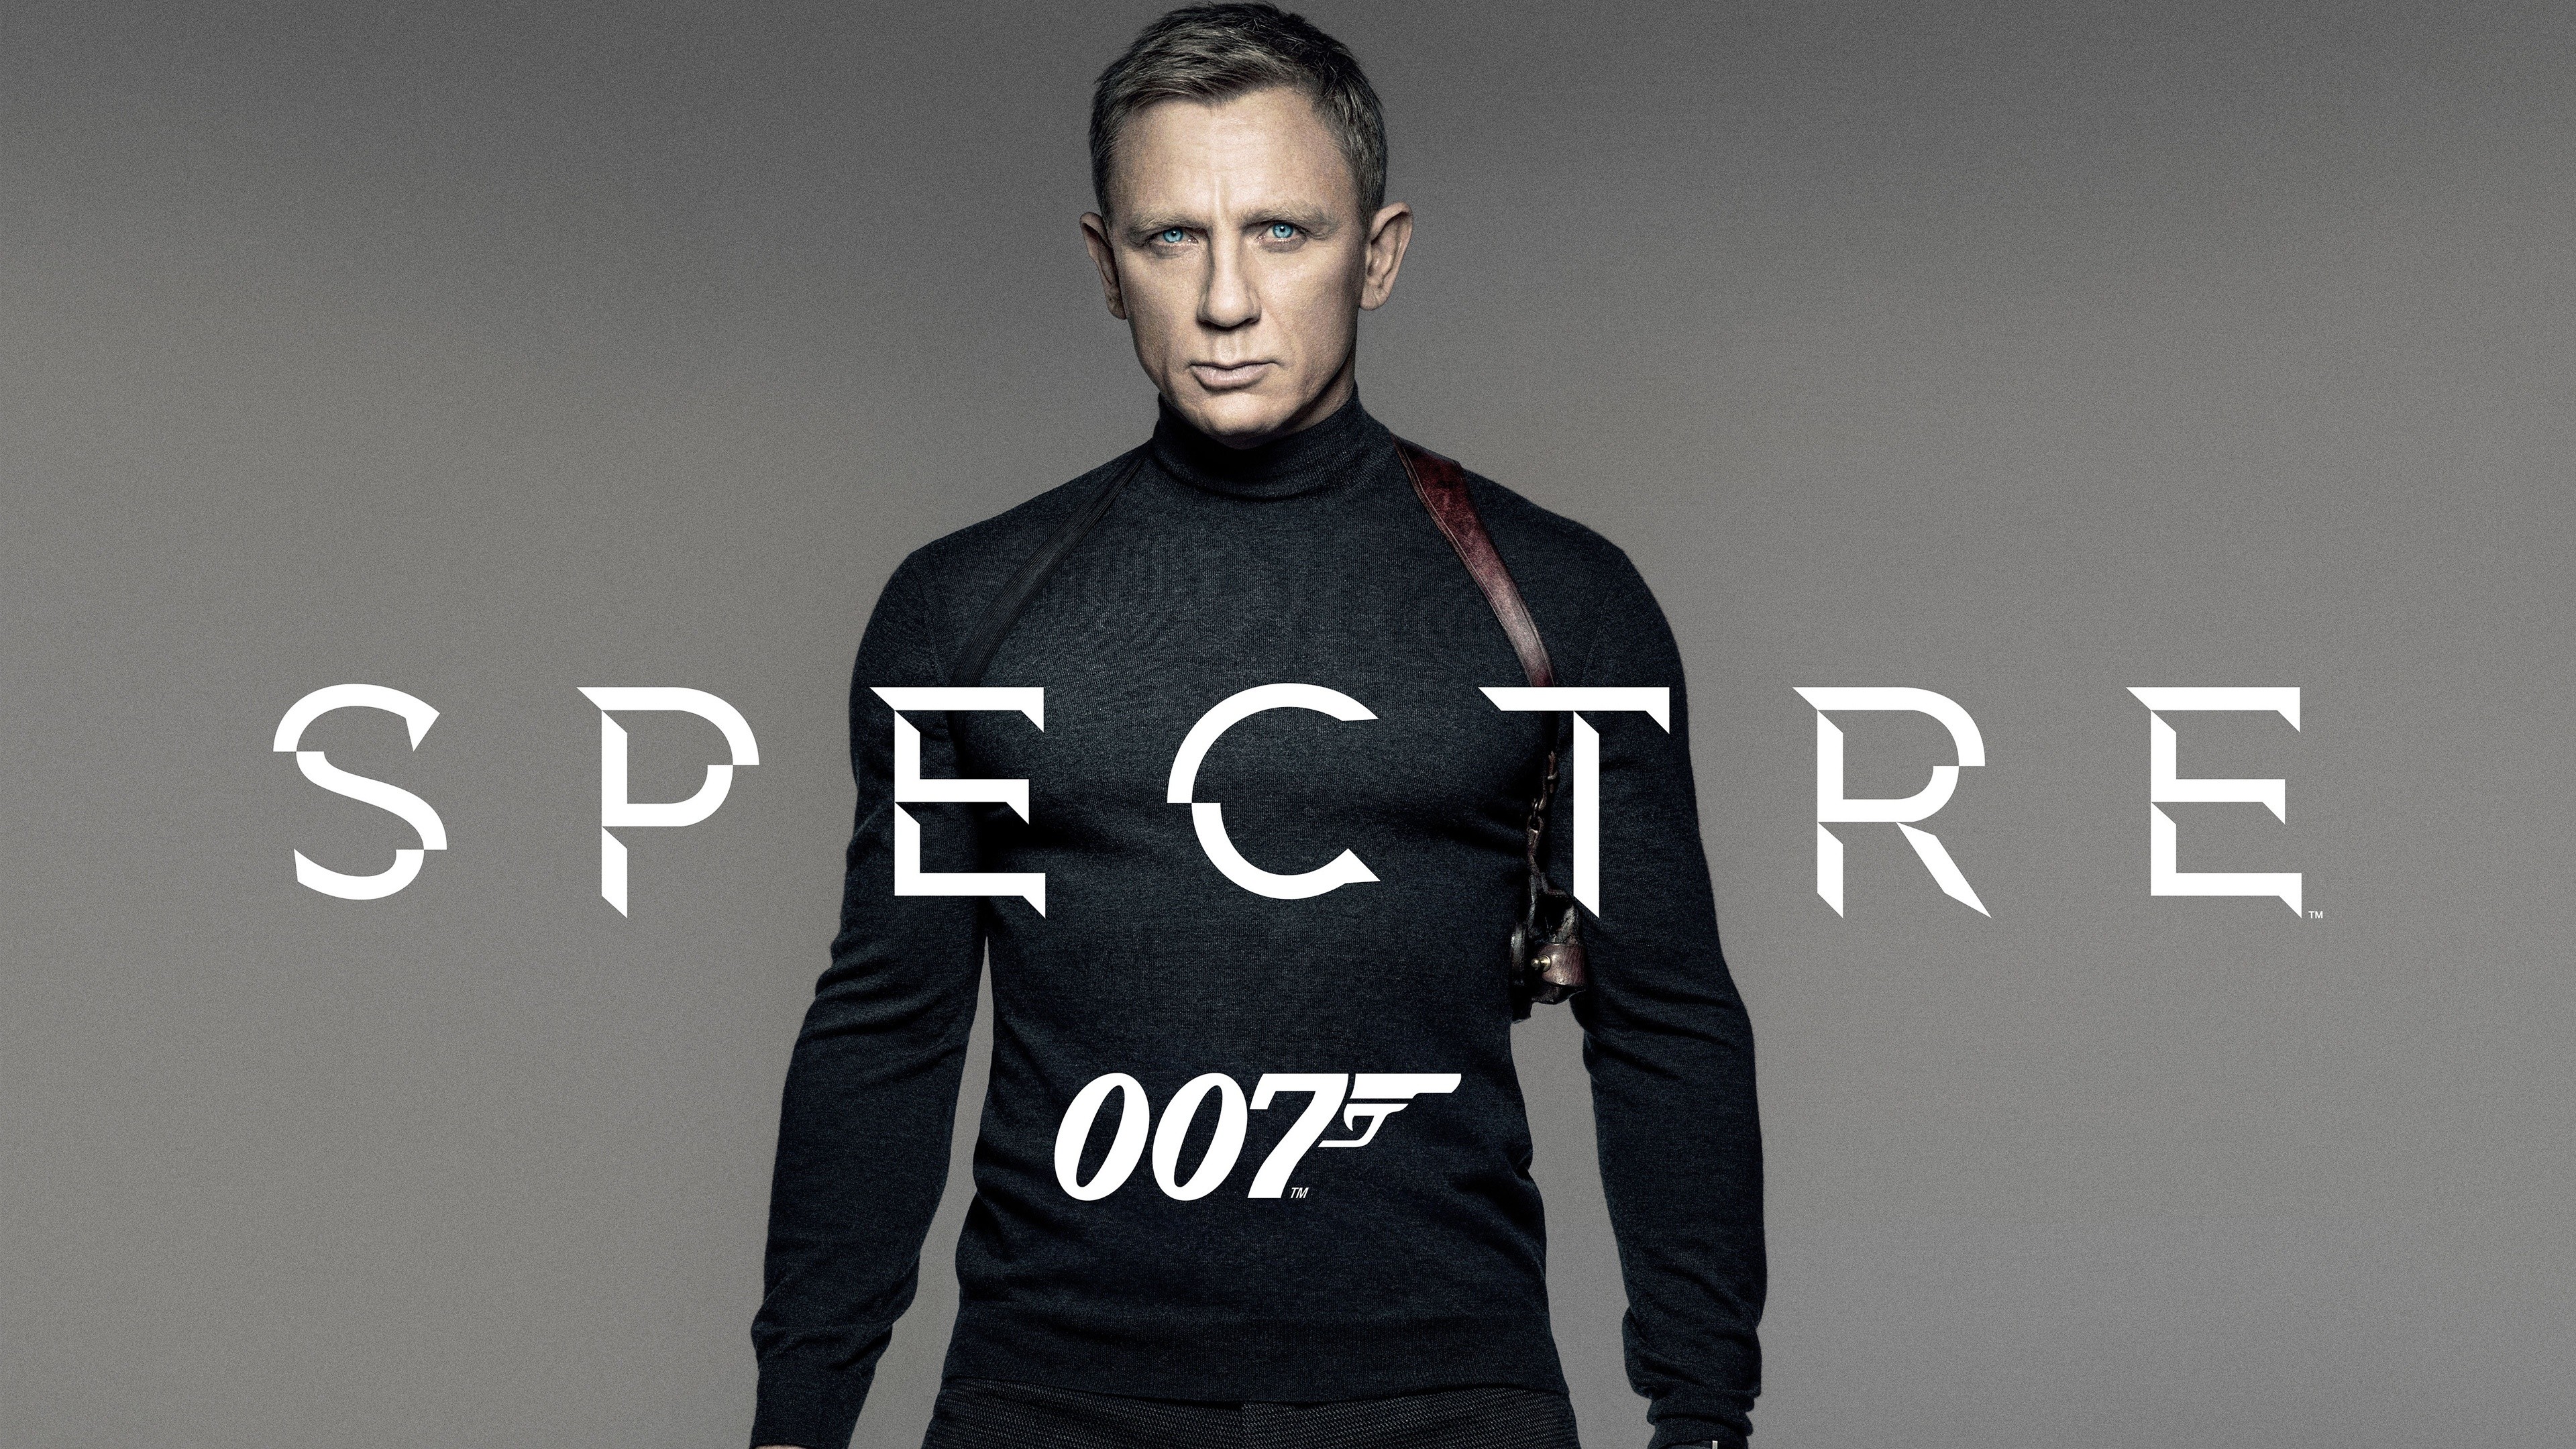 Movie Poster Of Spectre 007 James Bond – Daniel Craig For ...